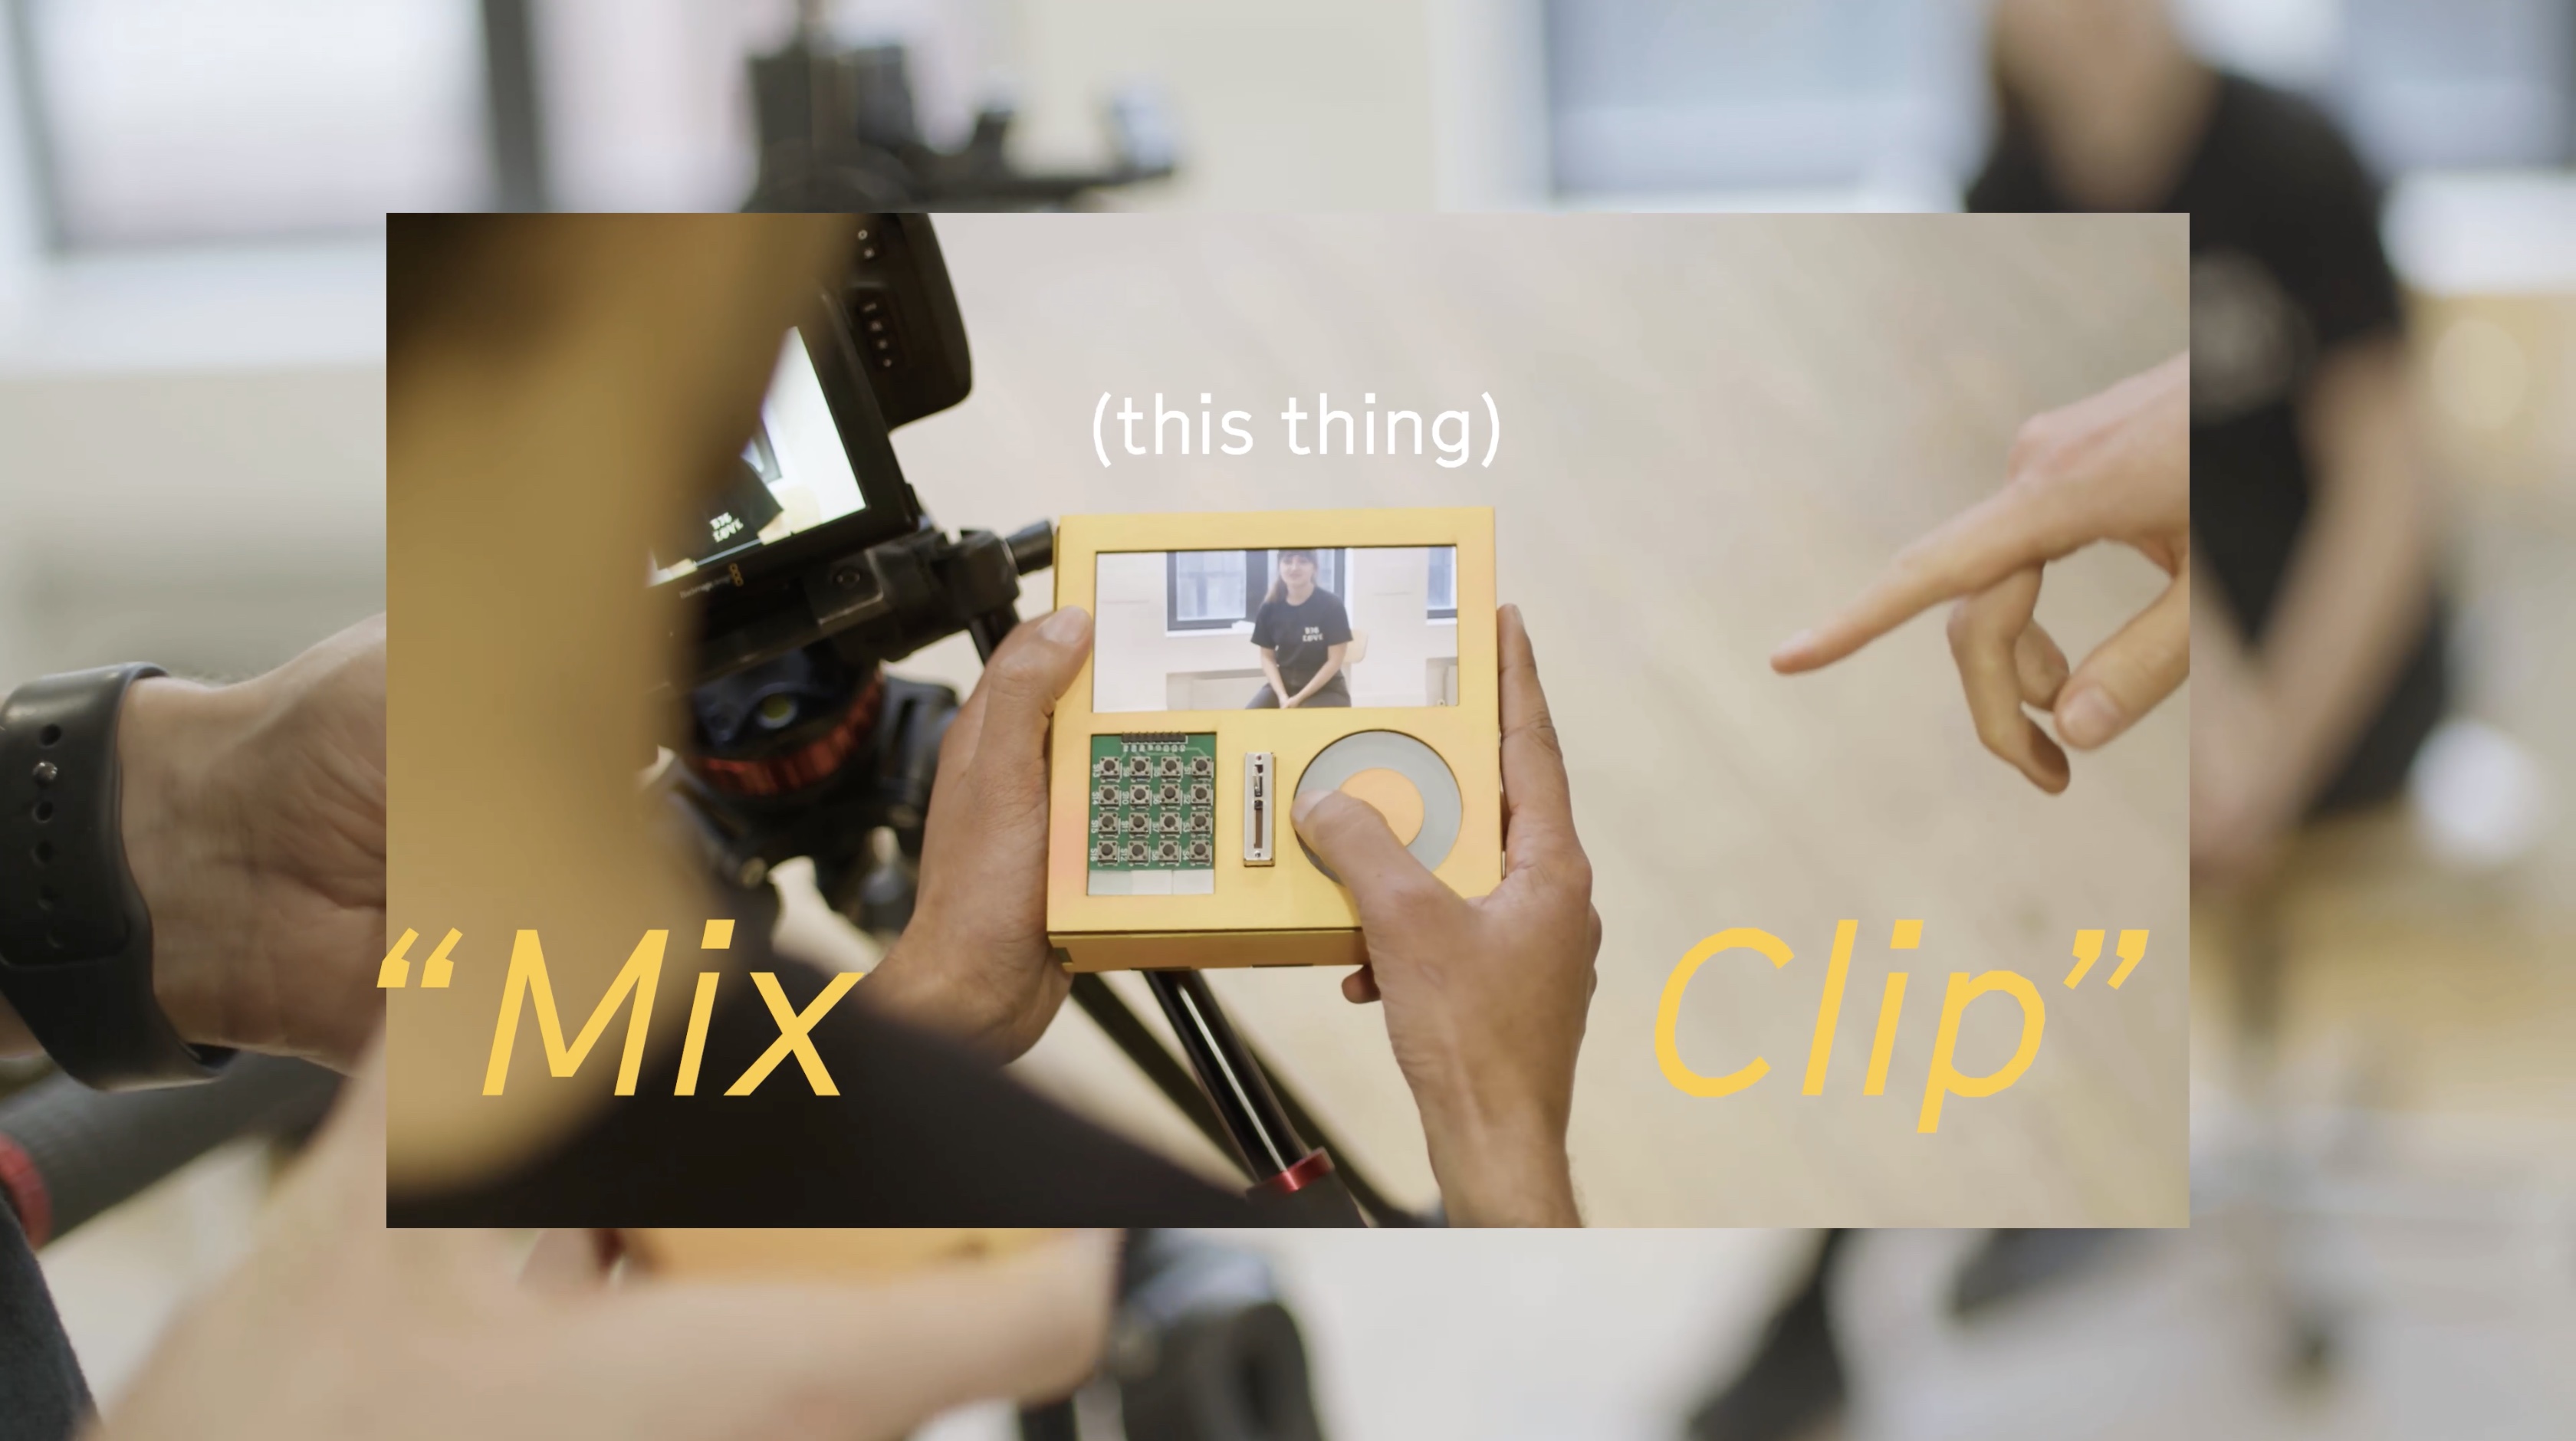 MX-CLP, a new video editing interface